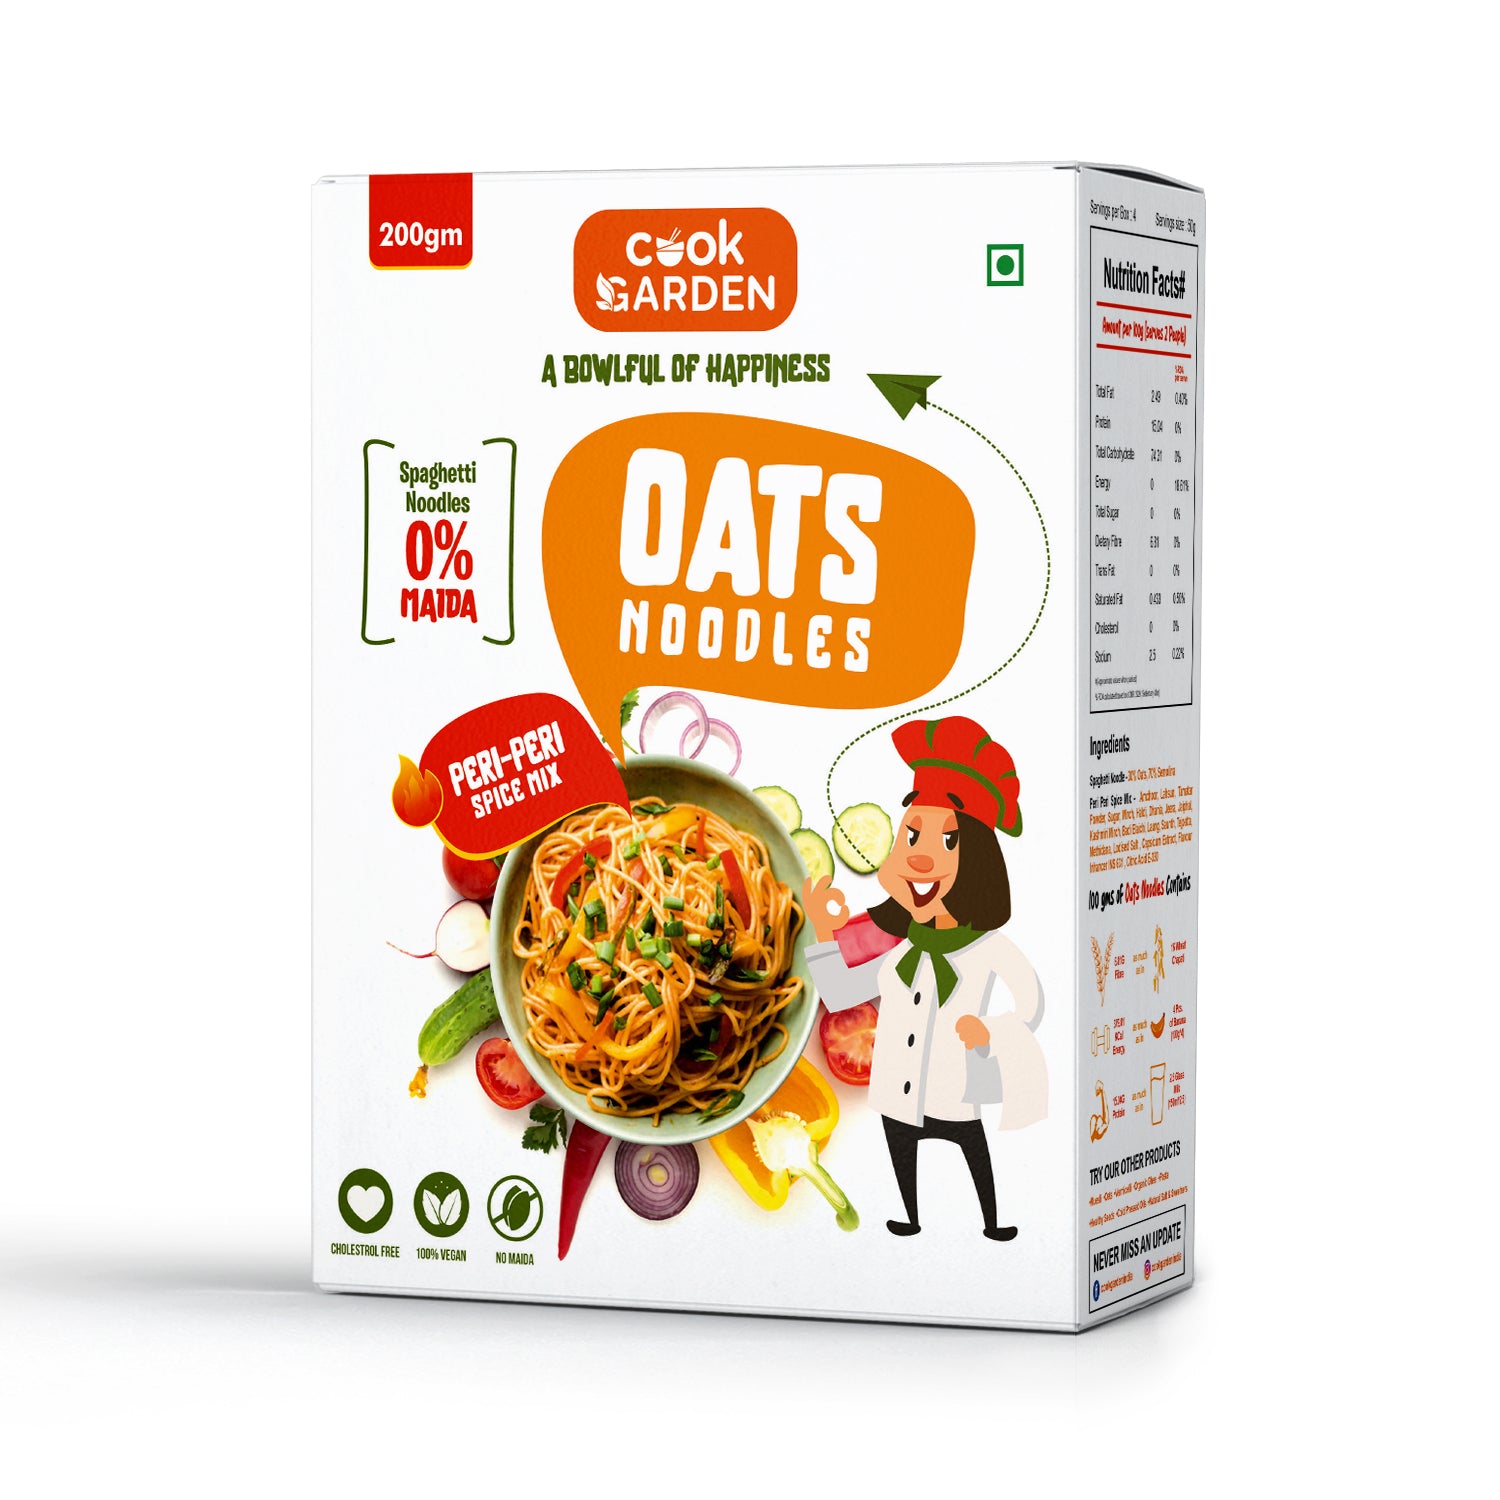 Peri Peri Spice Mix Oats Noodles 200g | Maida Free | Healthy Meal